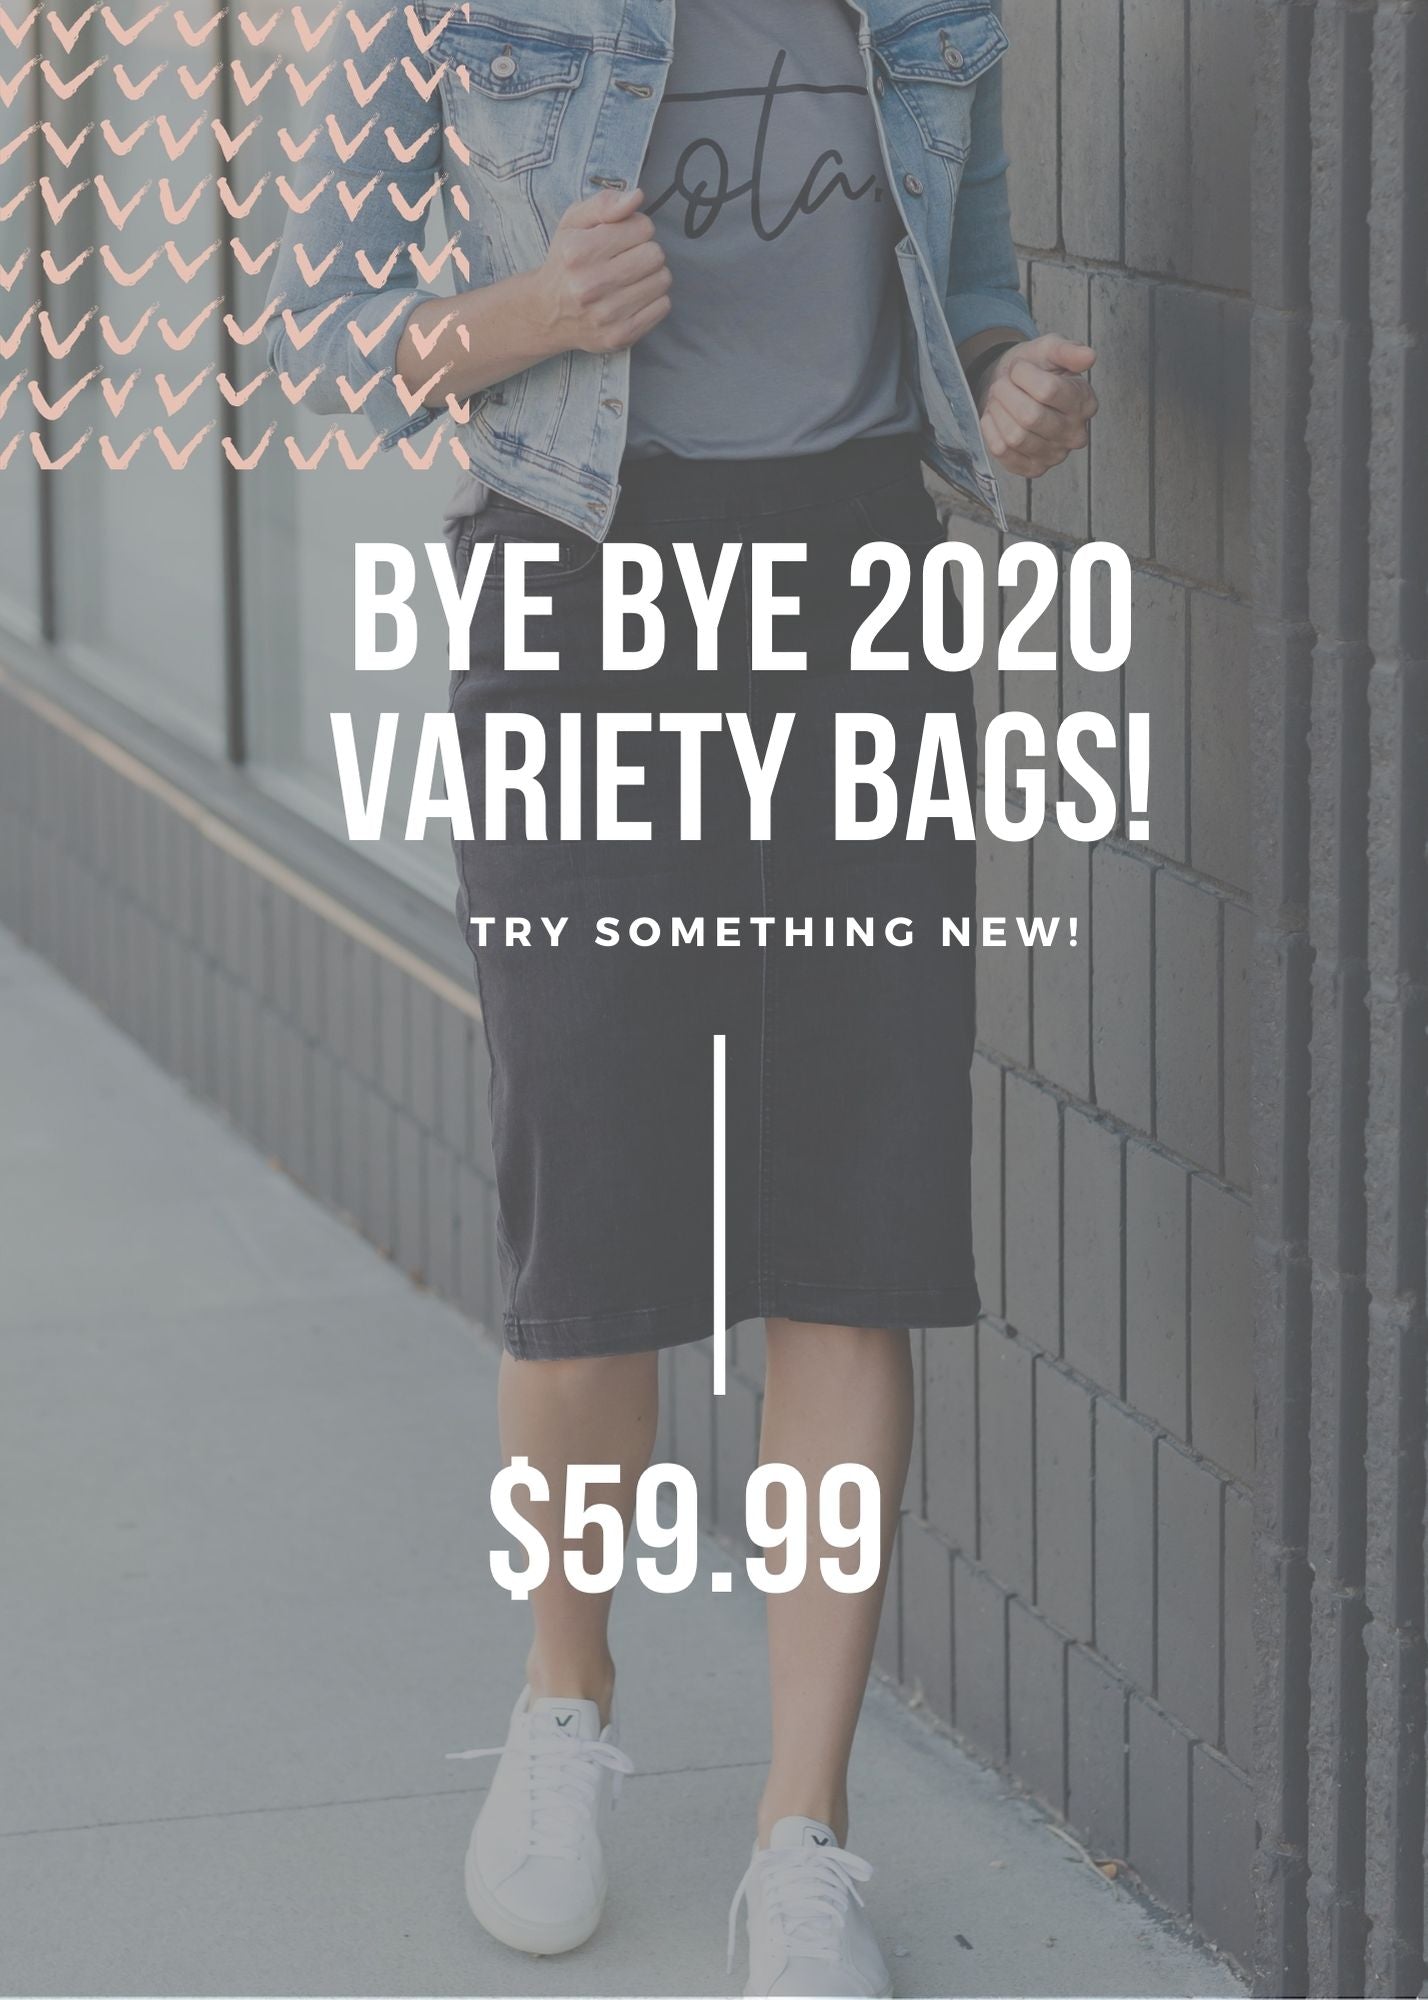 GOODBYE 2020 VARIETY MYSTERY BAGS!